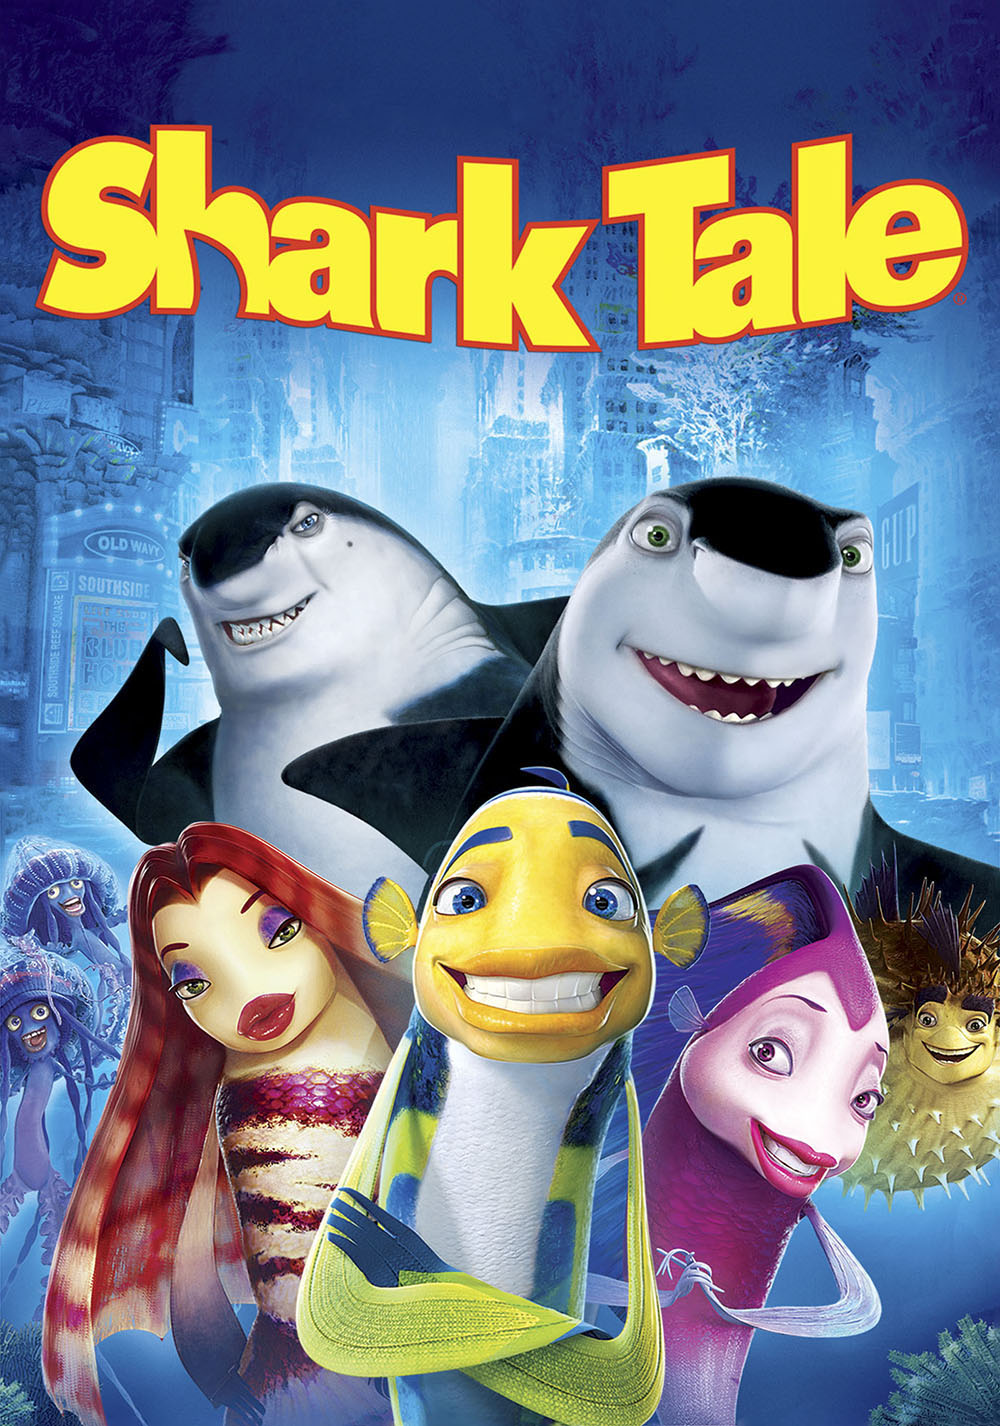 Stiahni si HD Filmy Příběh žraloka / Shark Tale (2004)(CZ/EN)[Remux](Oprava zvukove stopy) = CSFD 65%